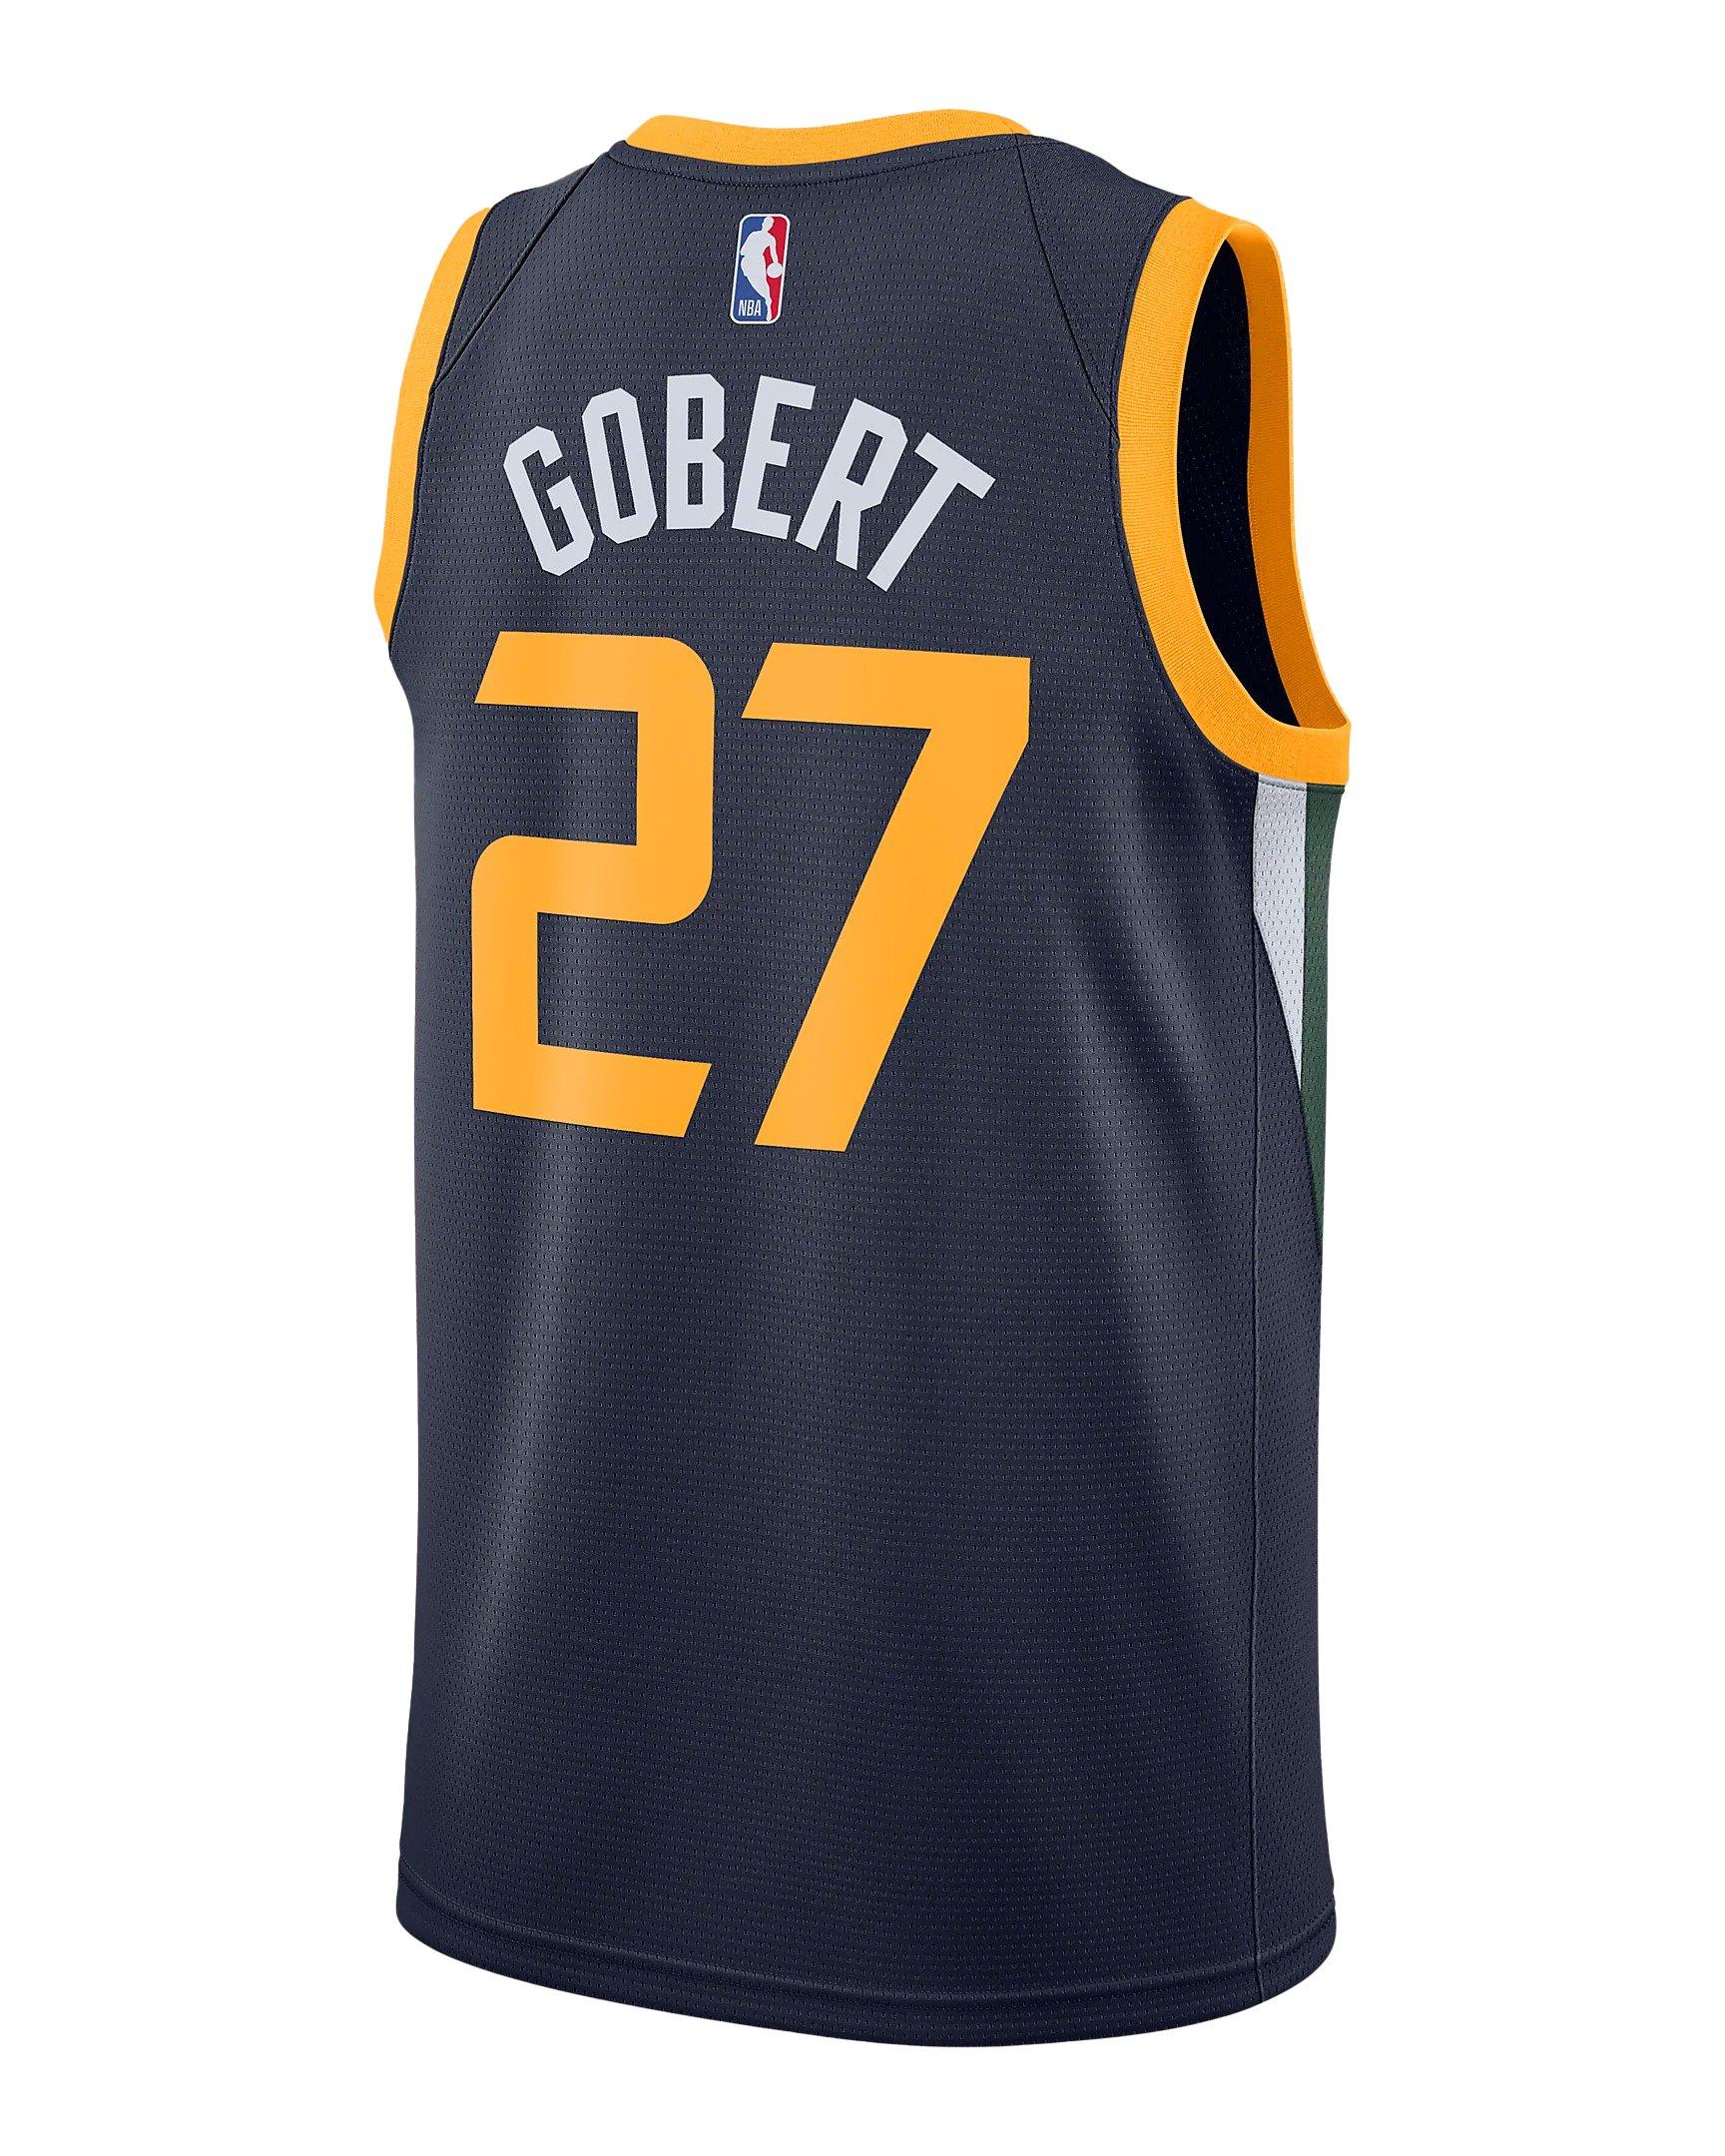 Rudy Gobert - Utah Jazz - Game-Worn City Edition Jersey - Double